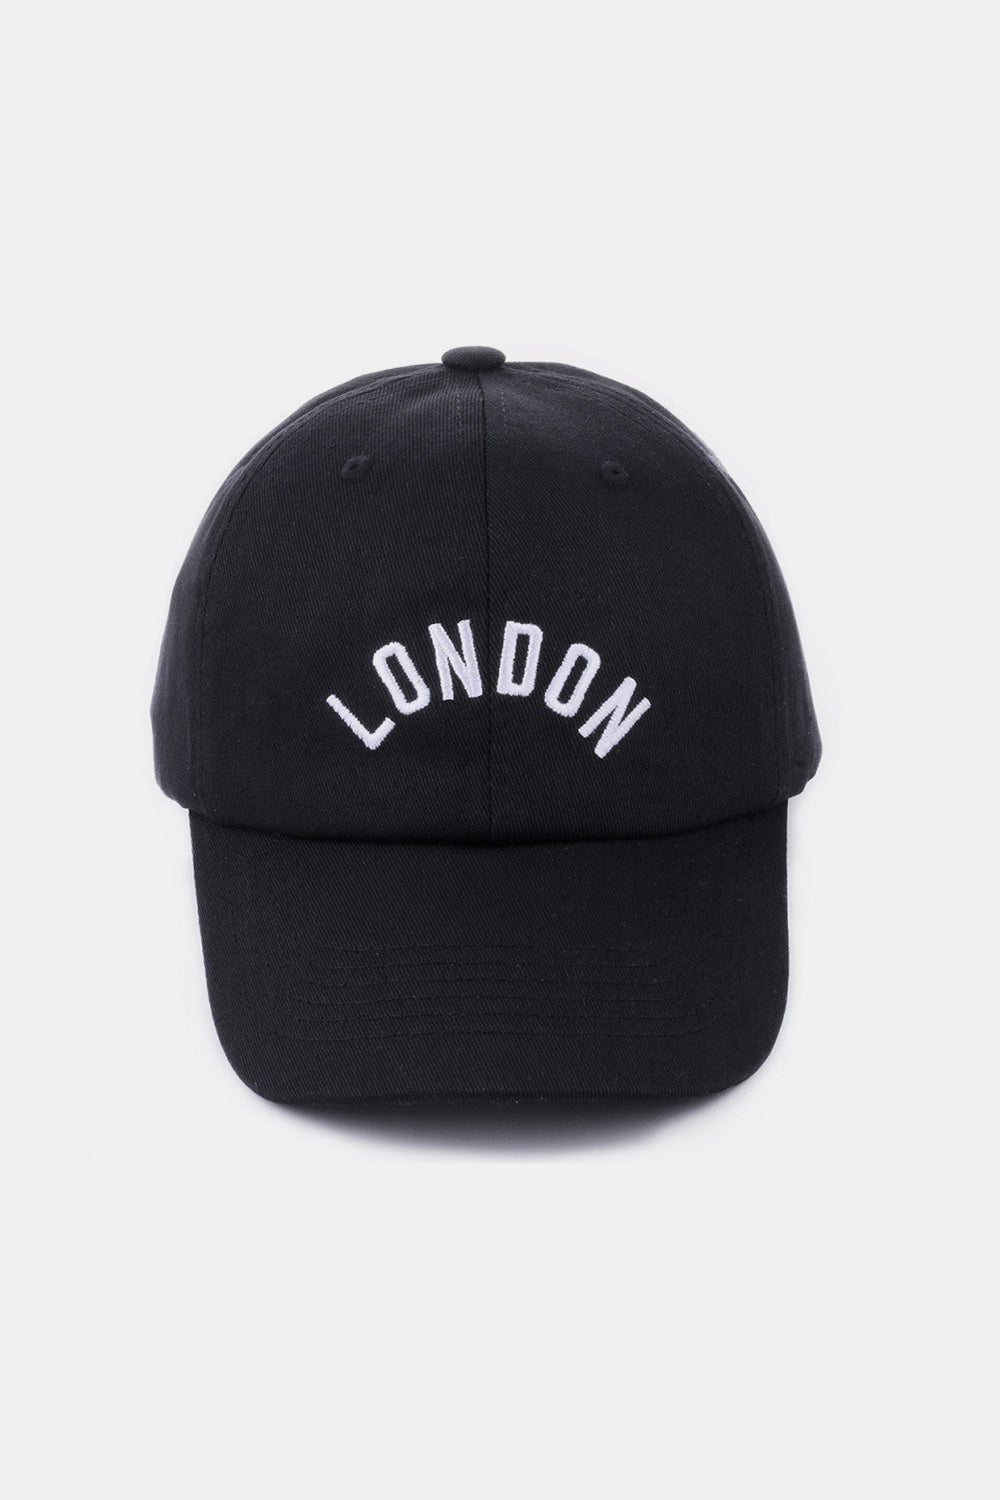 London Black / One Size